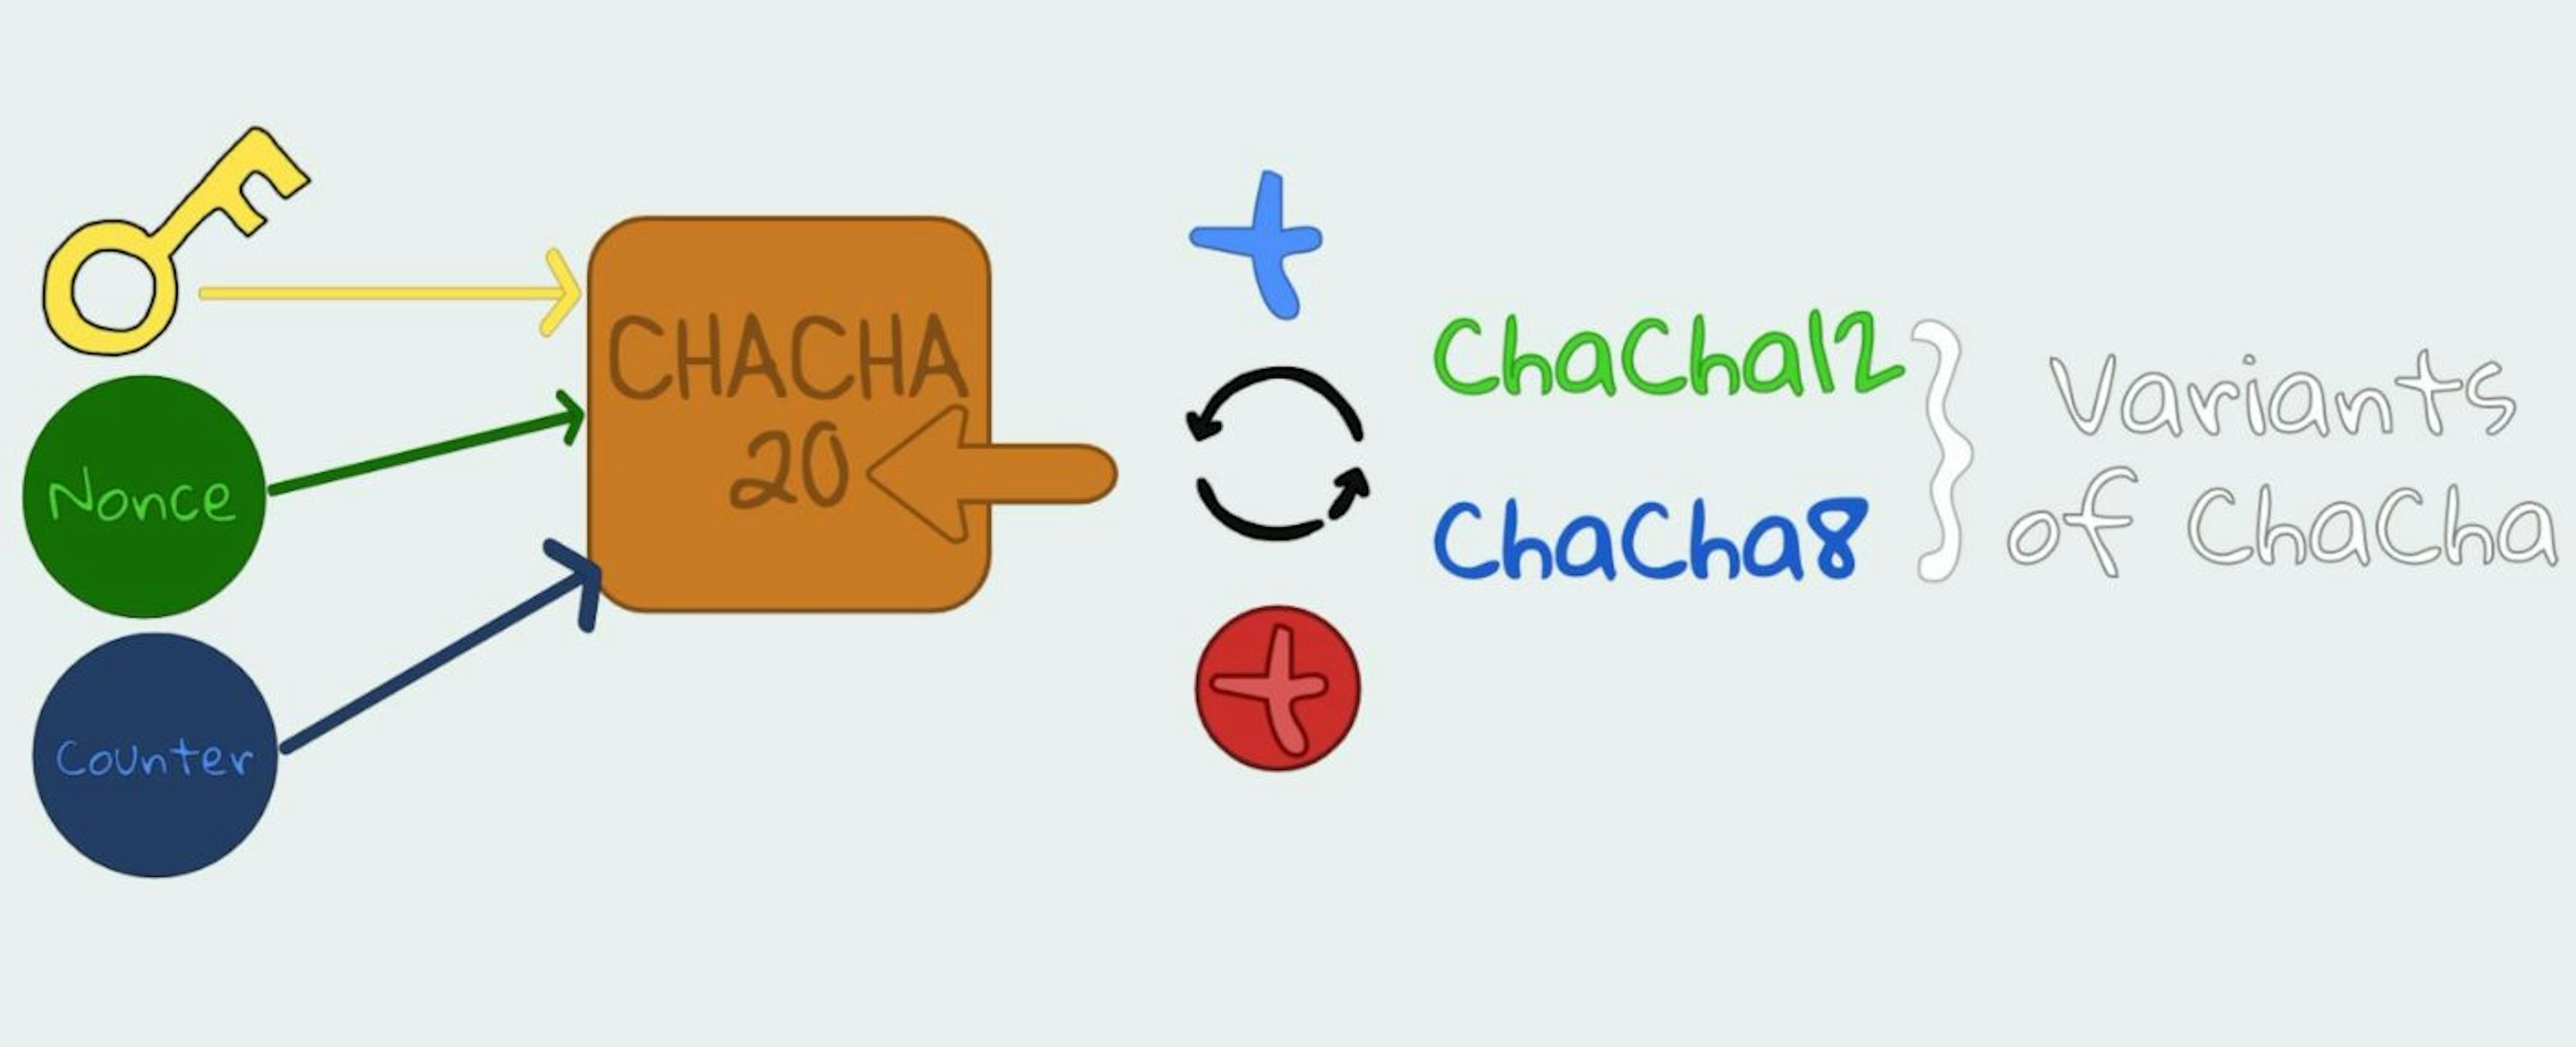 ChaCha12 and ChaCha8